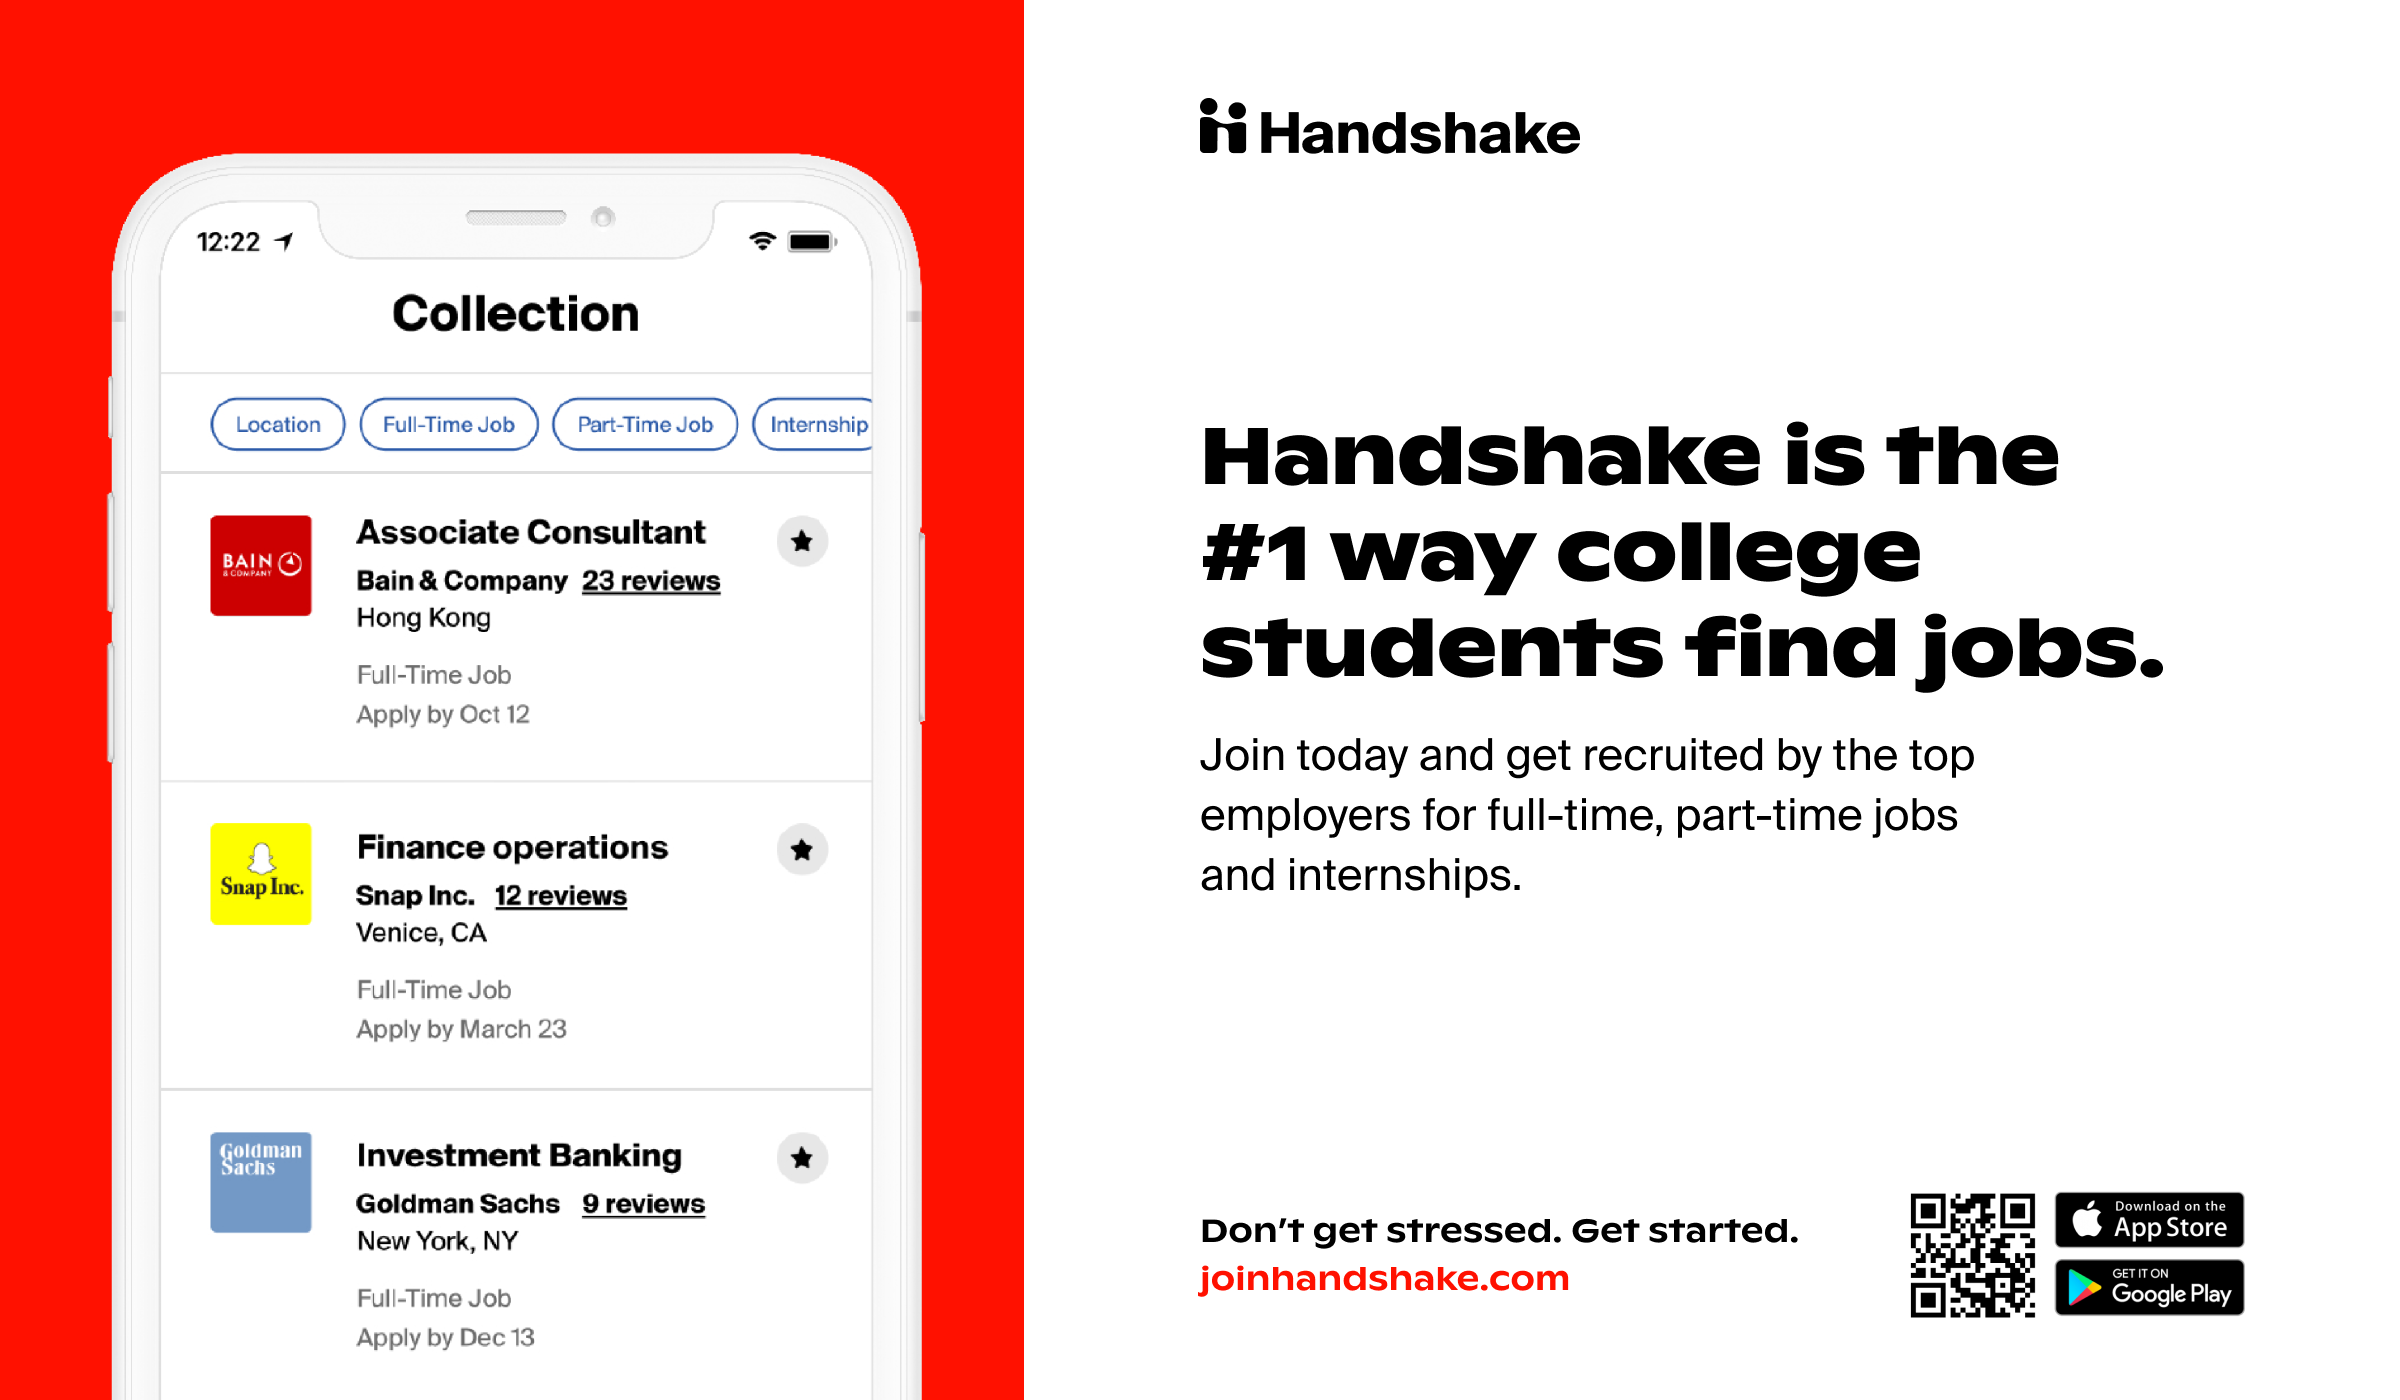 Handshake is the number 1 way college students find jobs